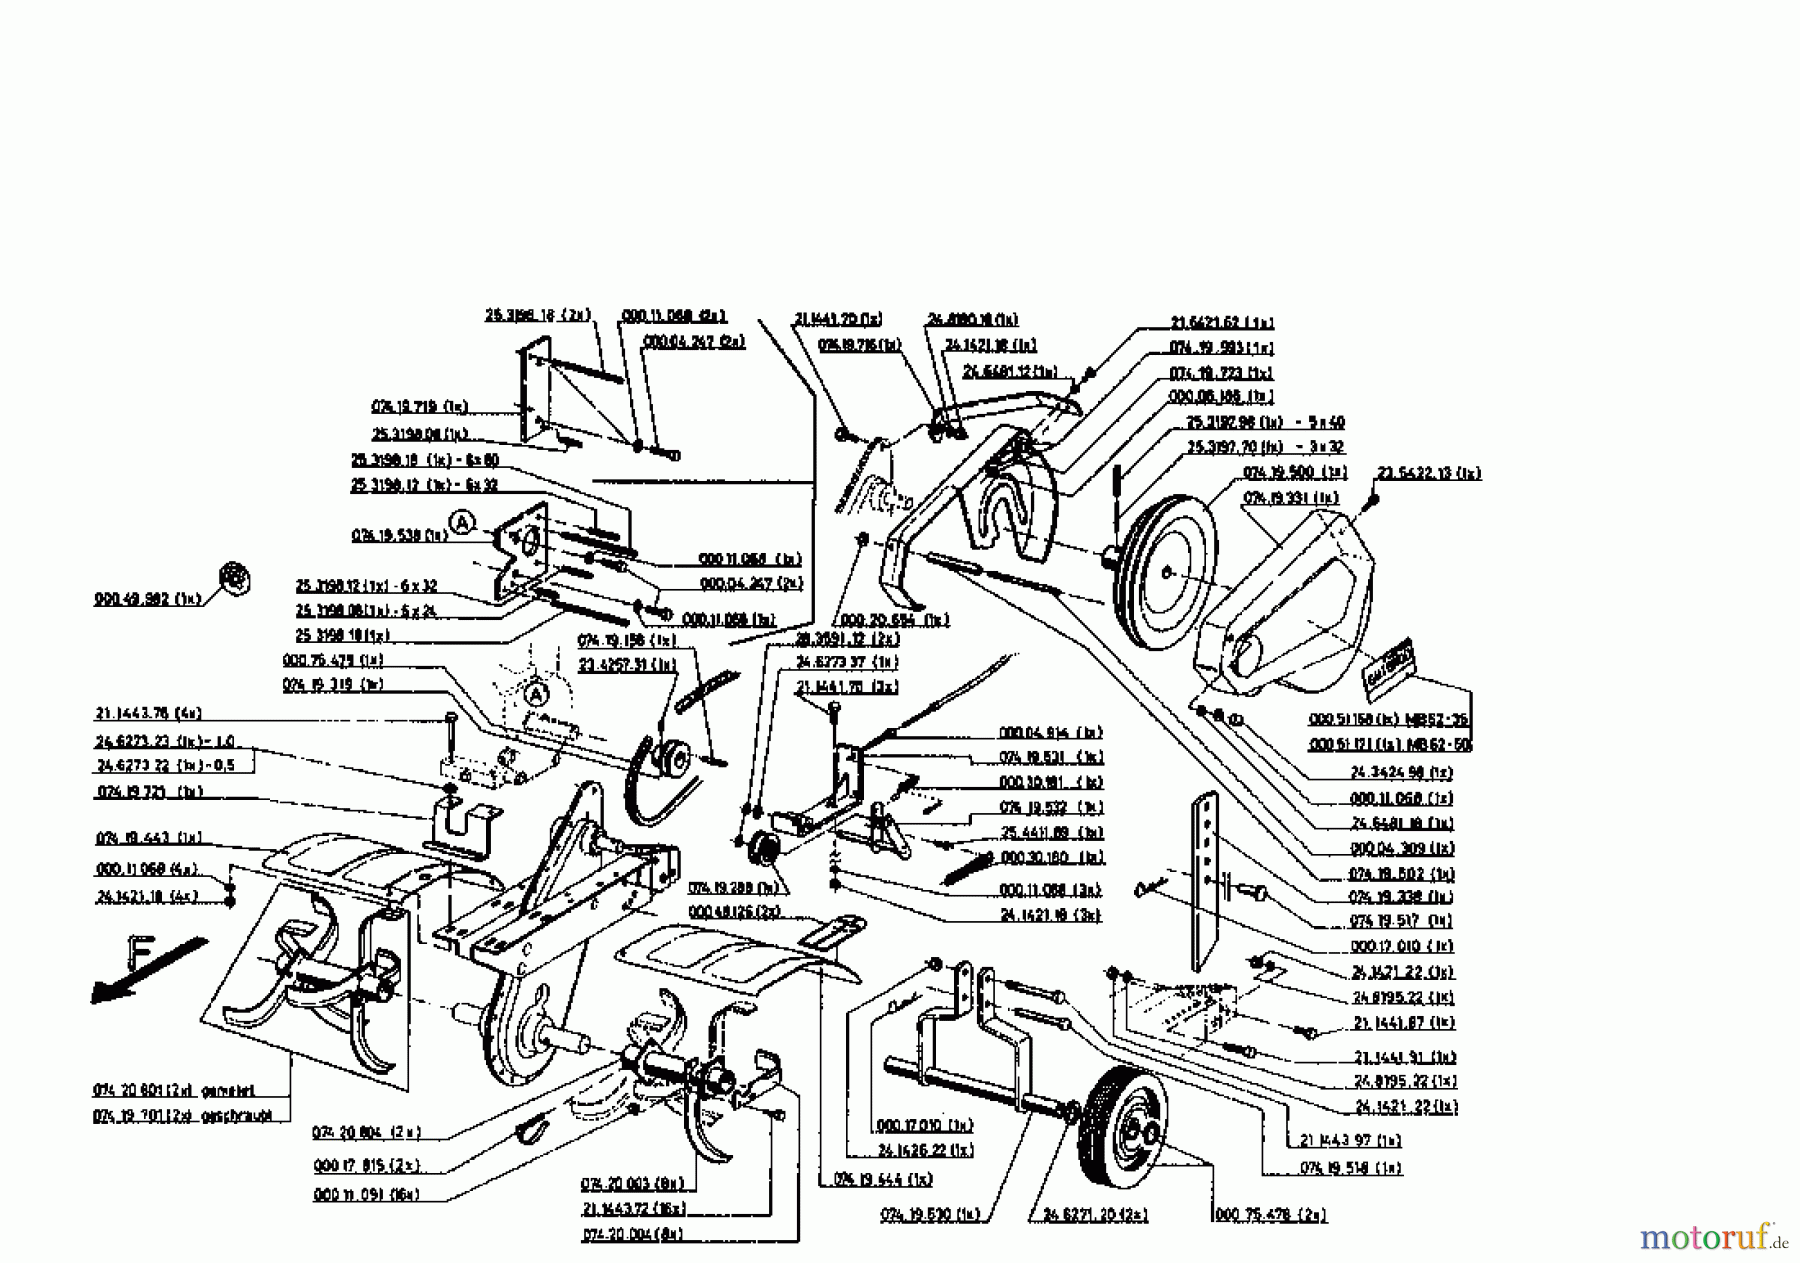  Gutbrod Tillers MB 62-35 07518.01  (1995) Basic machine